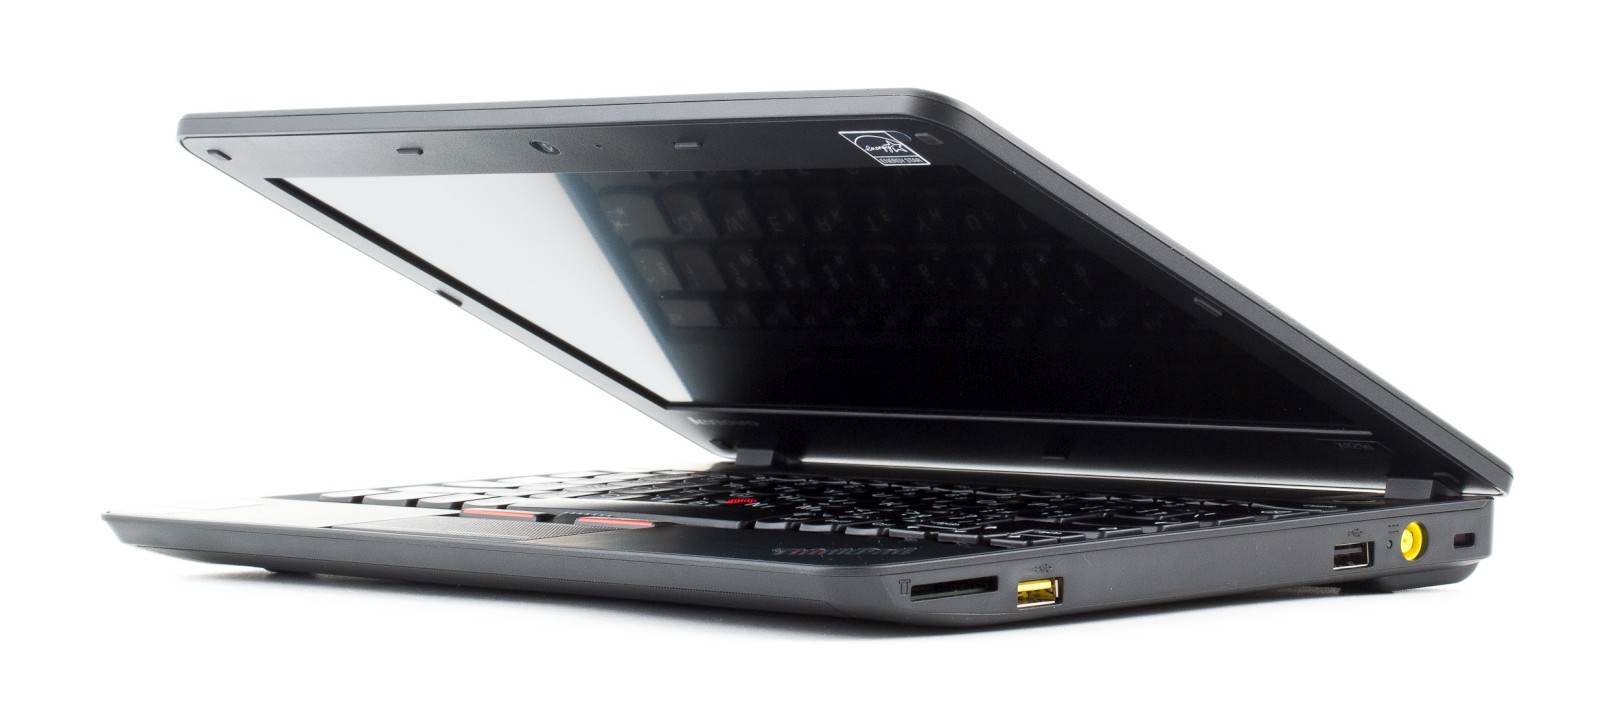 Ноутбук Lenovo Thinkpad X121e (3053ac8-4gb)